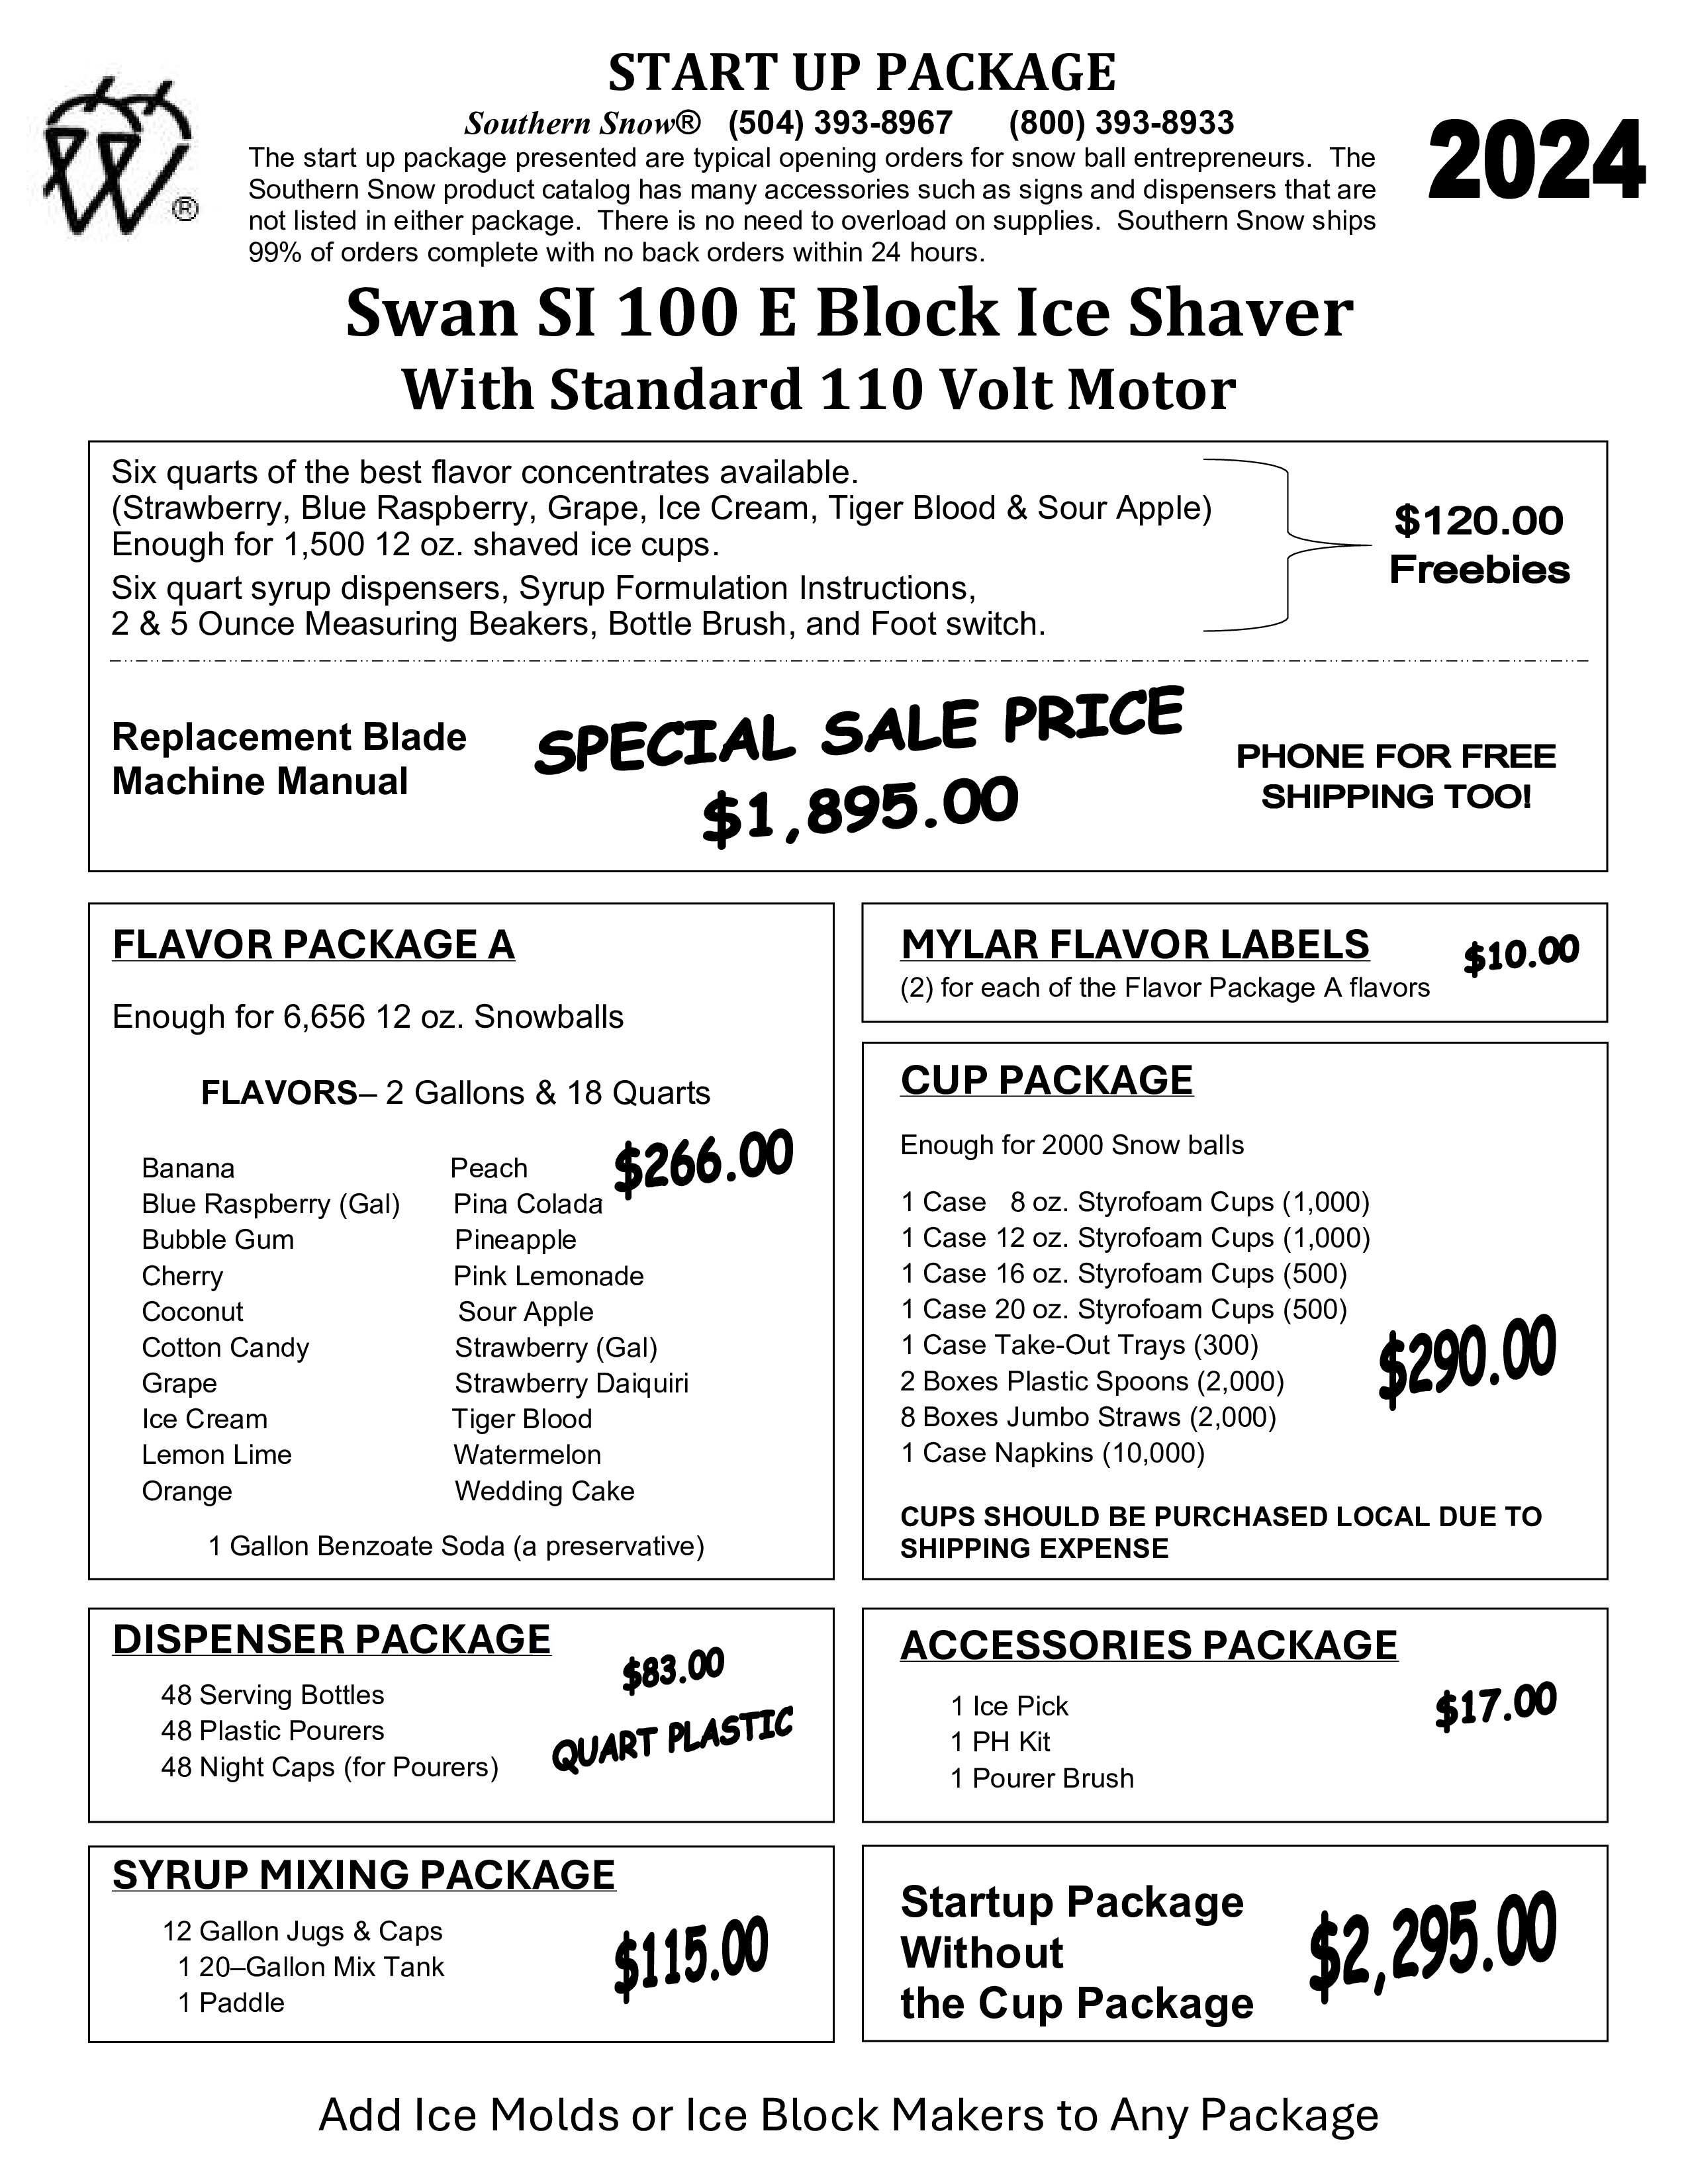 Swan SI-100E Block Ice Shaver Start Up